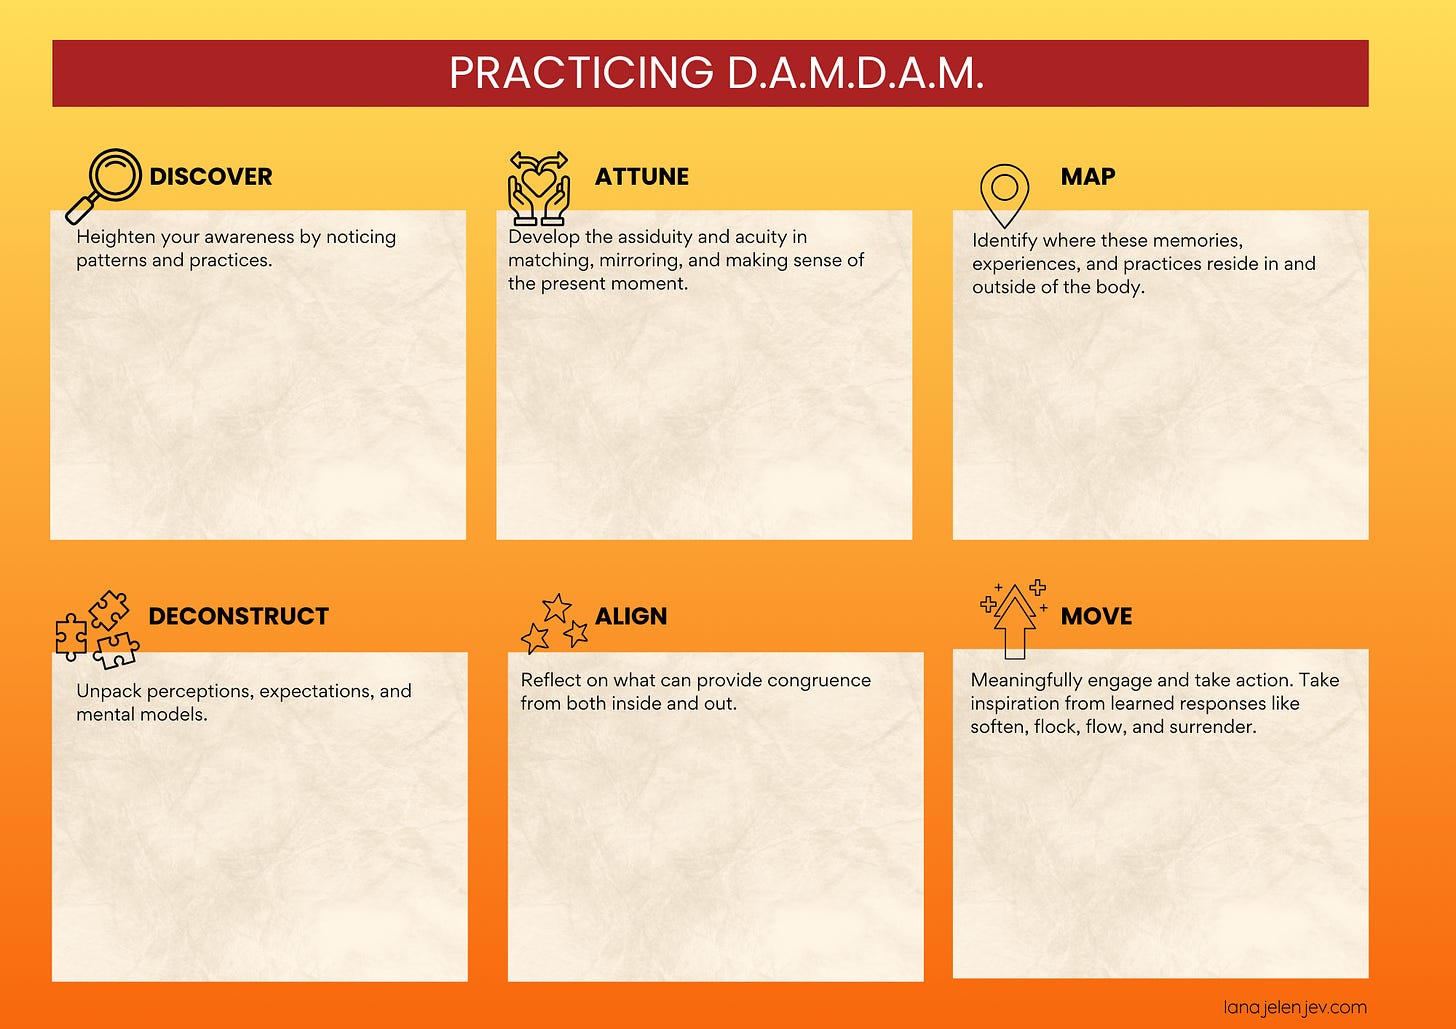 Practicing DAMDAM (Discover, Attune, Map, Deconstruct, Align, Move)